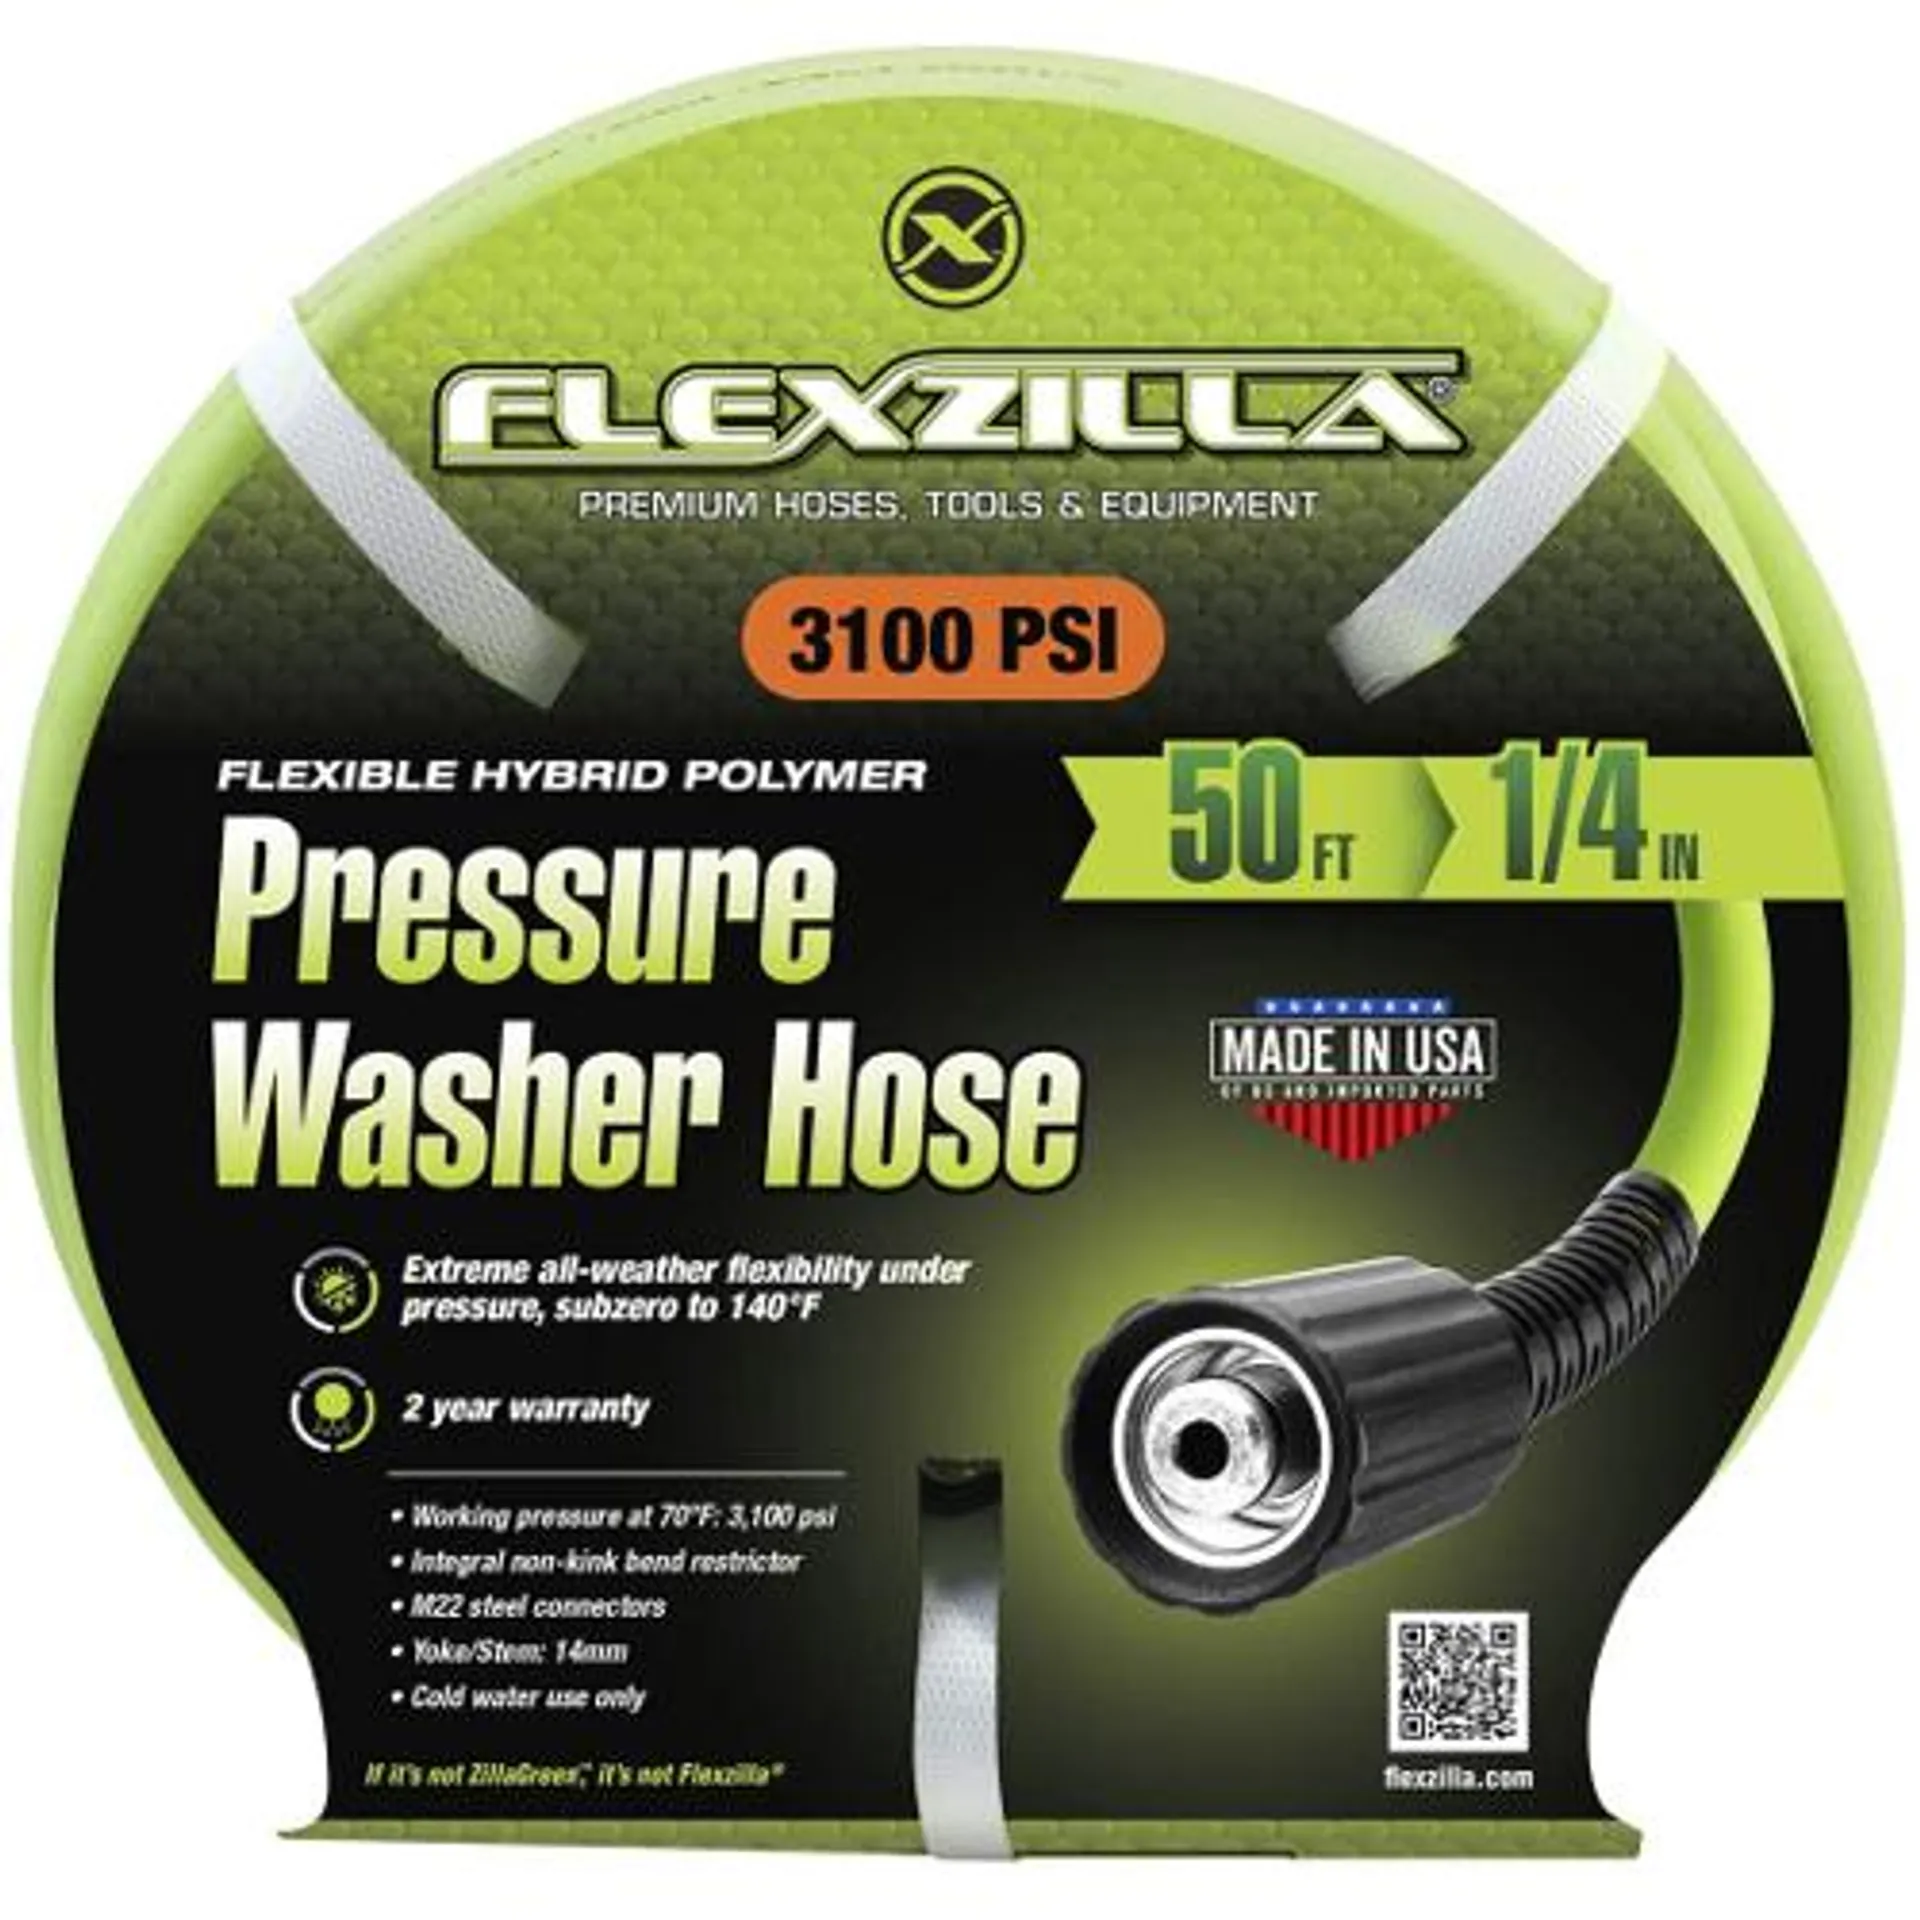 Flexzilla Pressure Washer Hose | HFZPW3450M